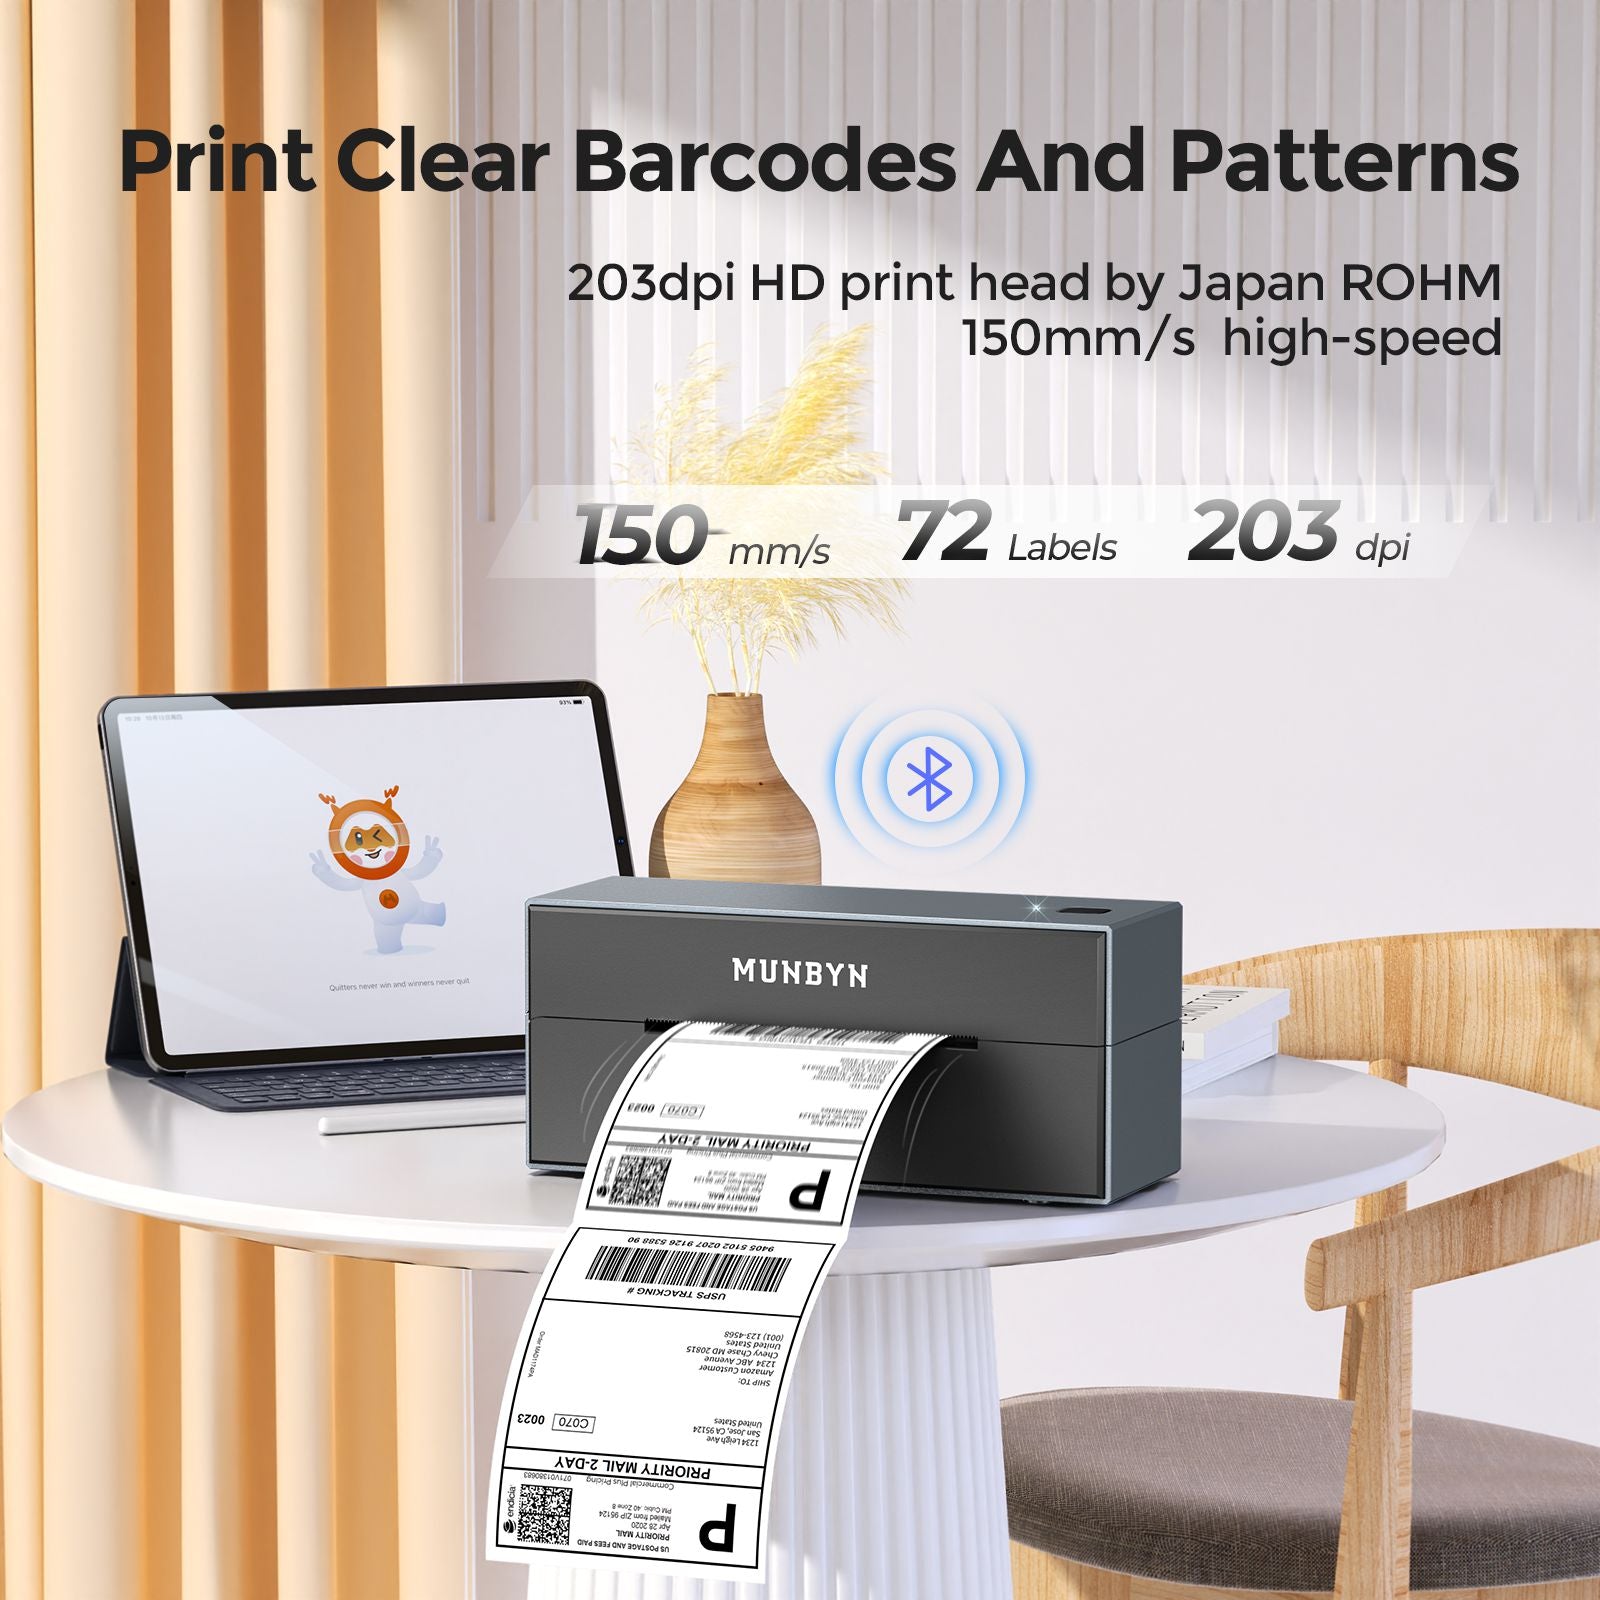 MUNBYN wireless Bluetooth label printer is a 203 dpi high-speed label printer.